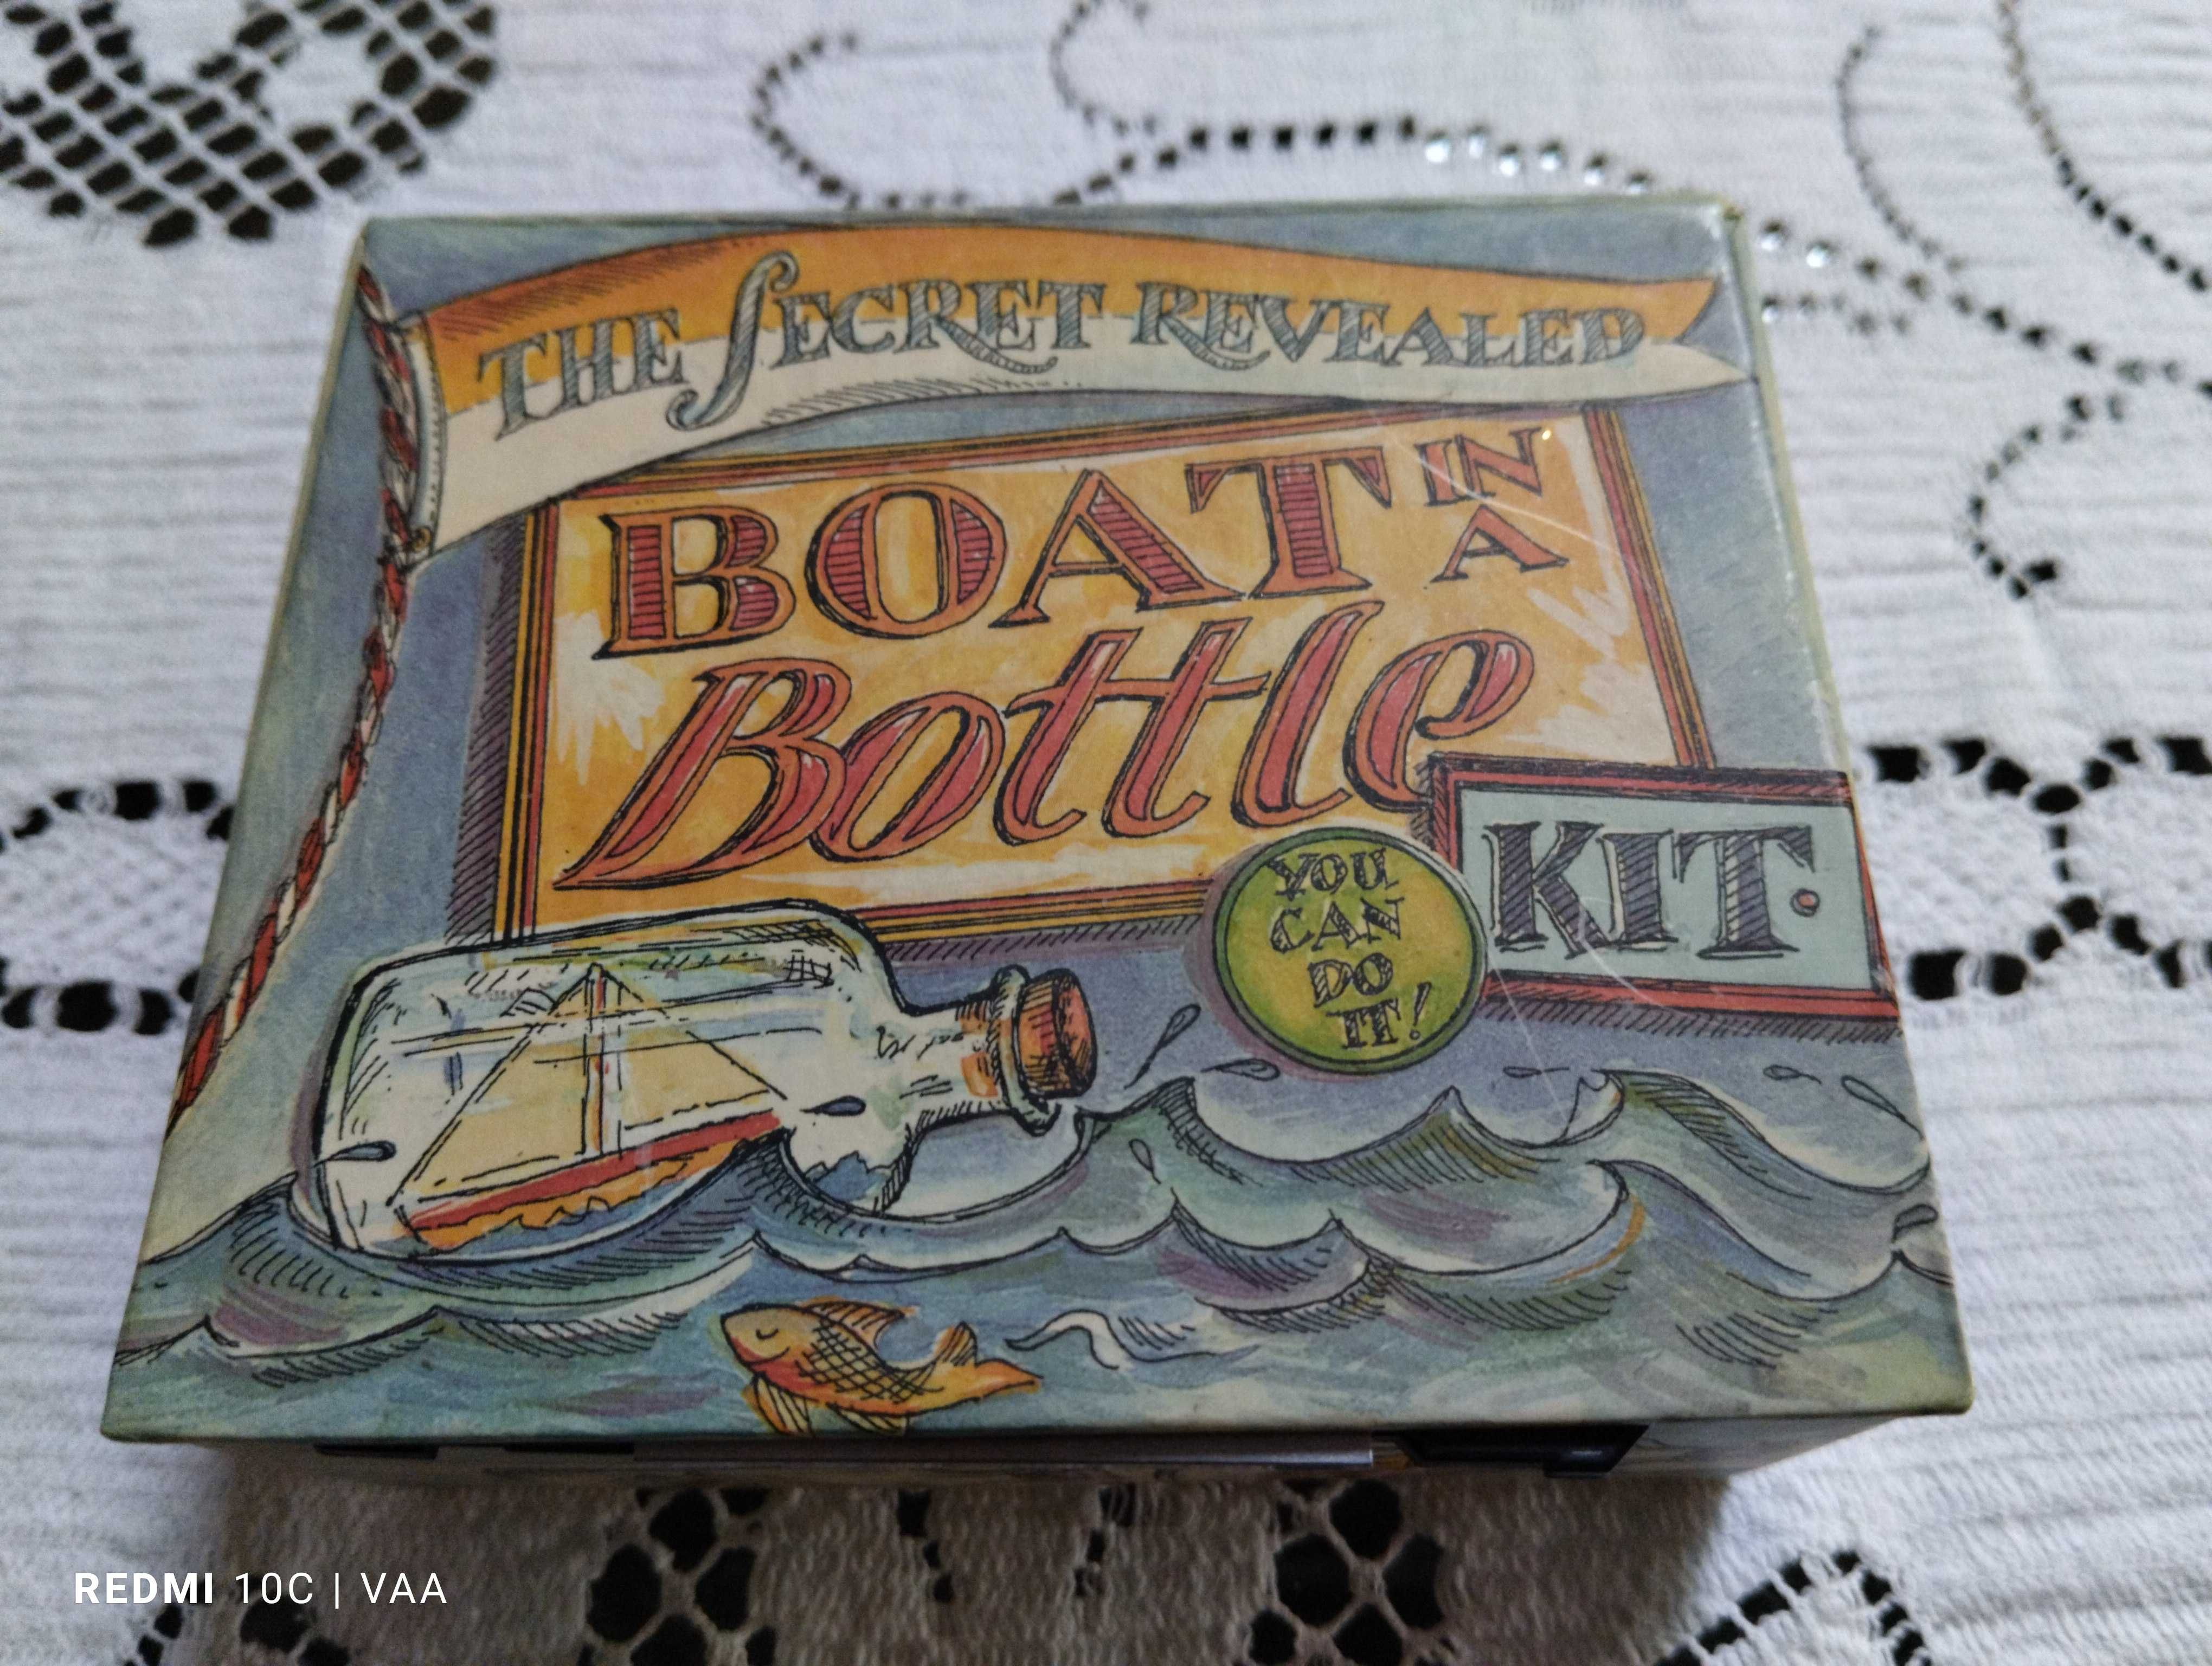 Boat in a bottle Kit - The secret revealed